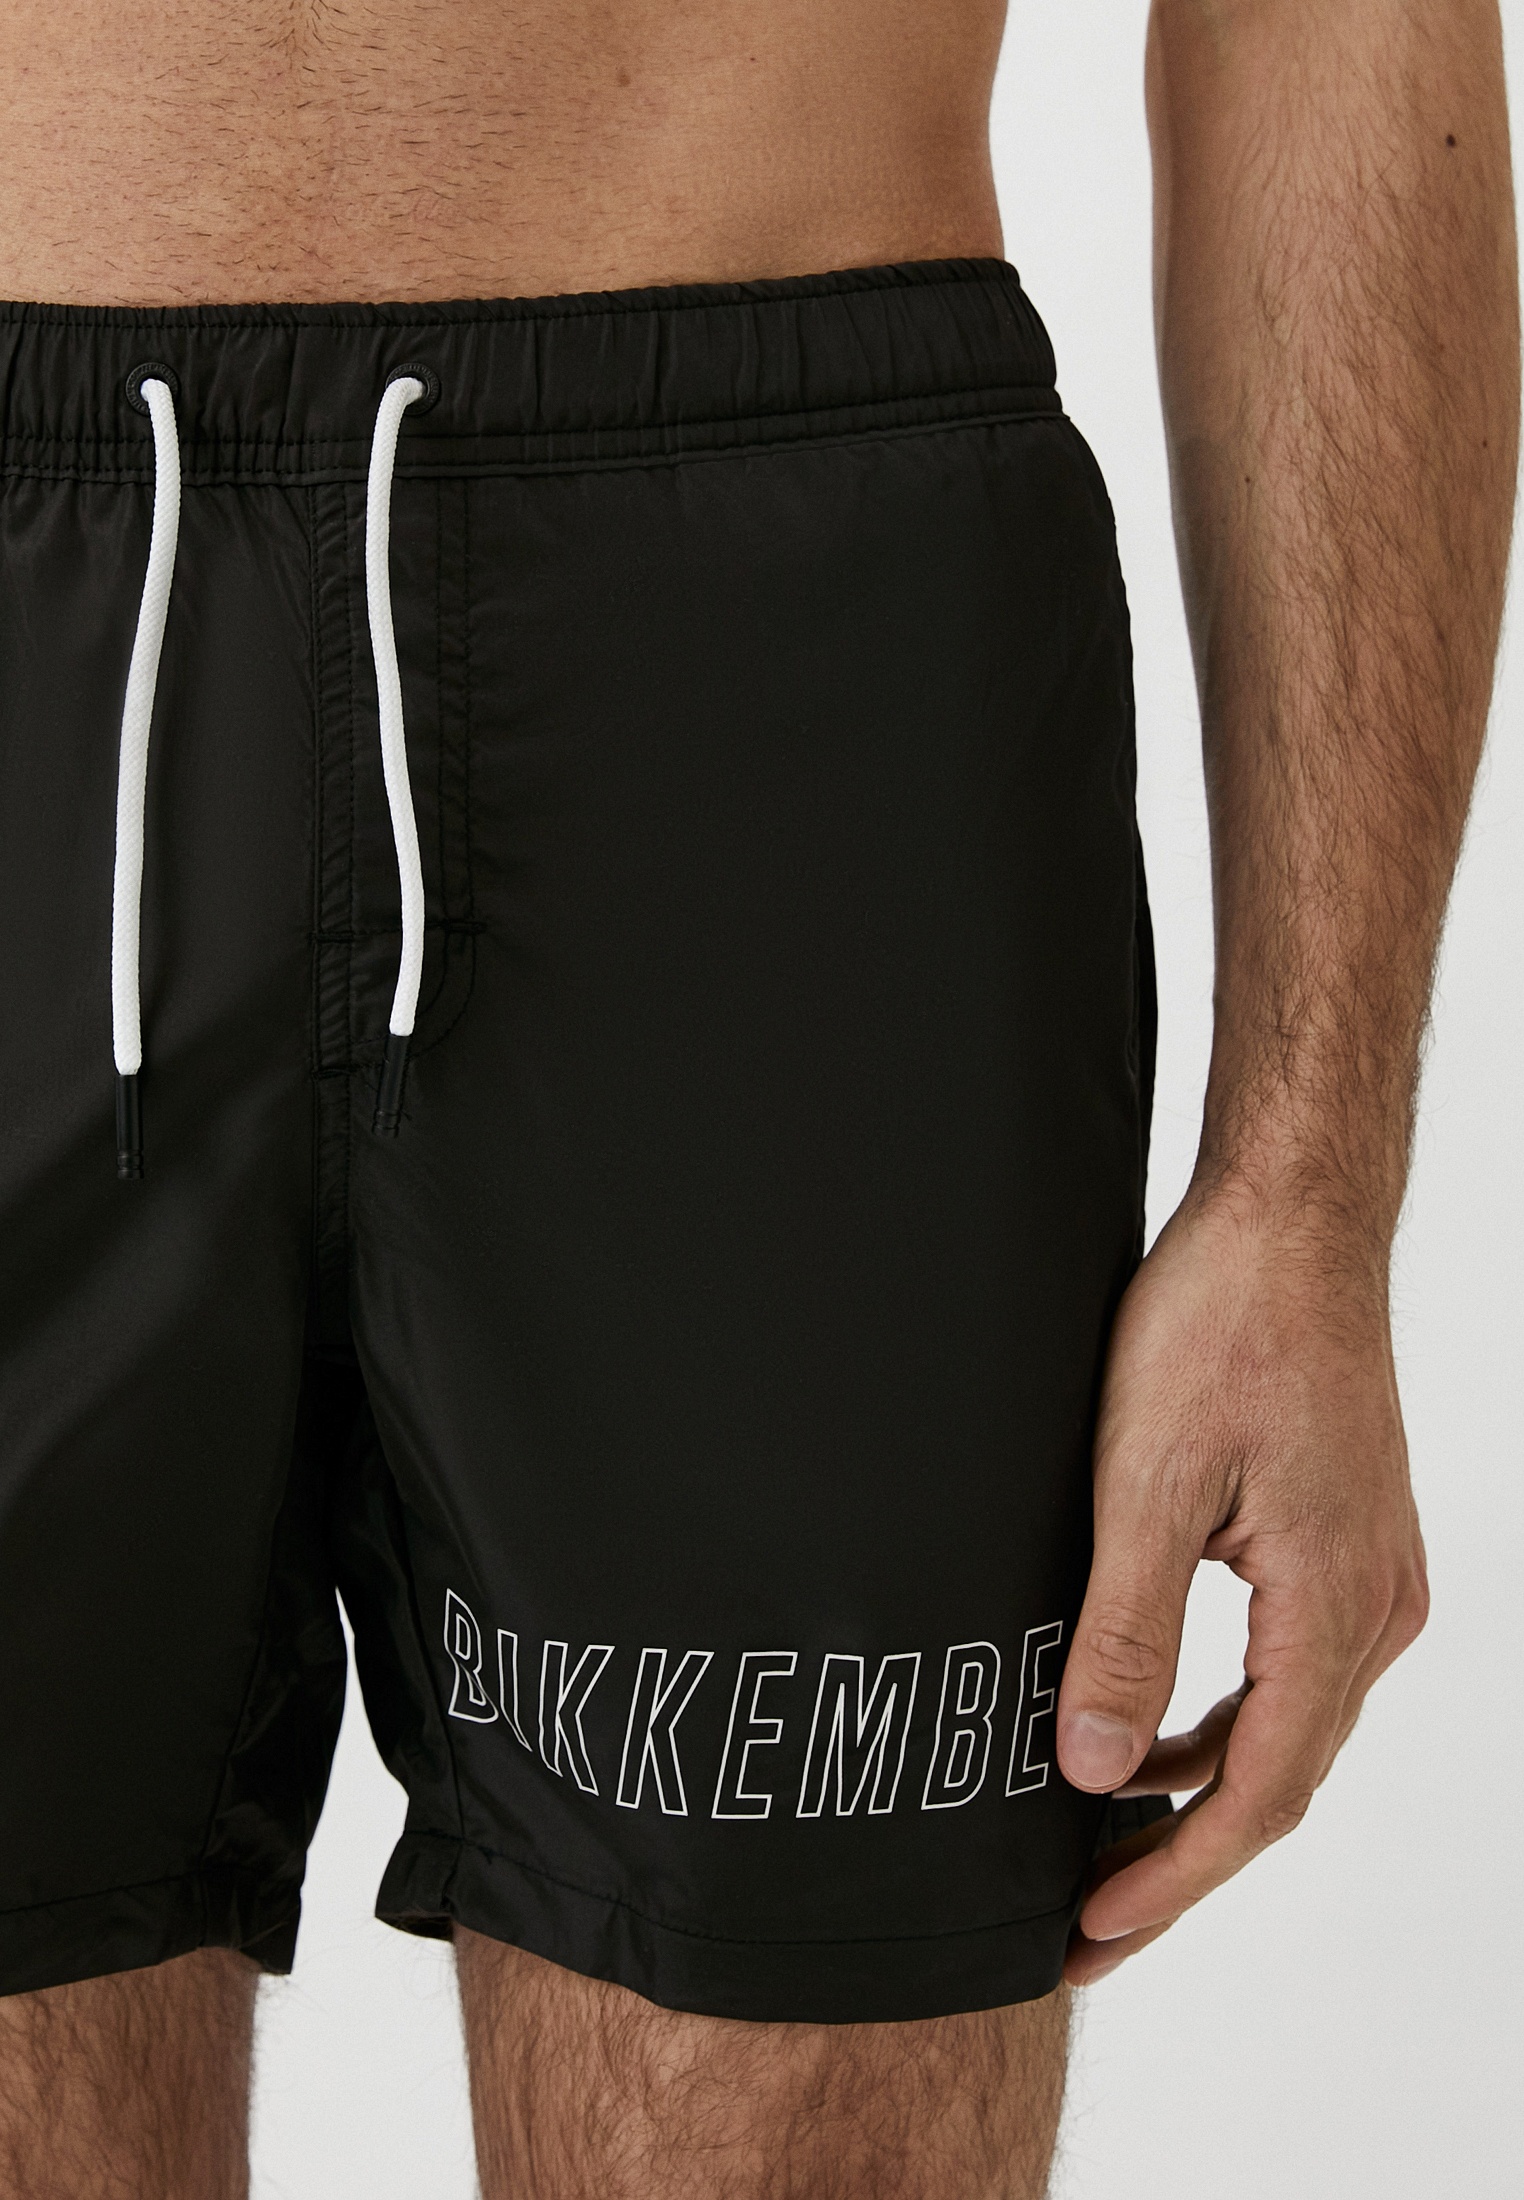 Мужские шорты для плавания Bikkembergs (Биккембергс) BKK1MBM01: изображение 6